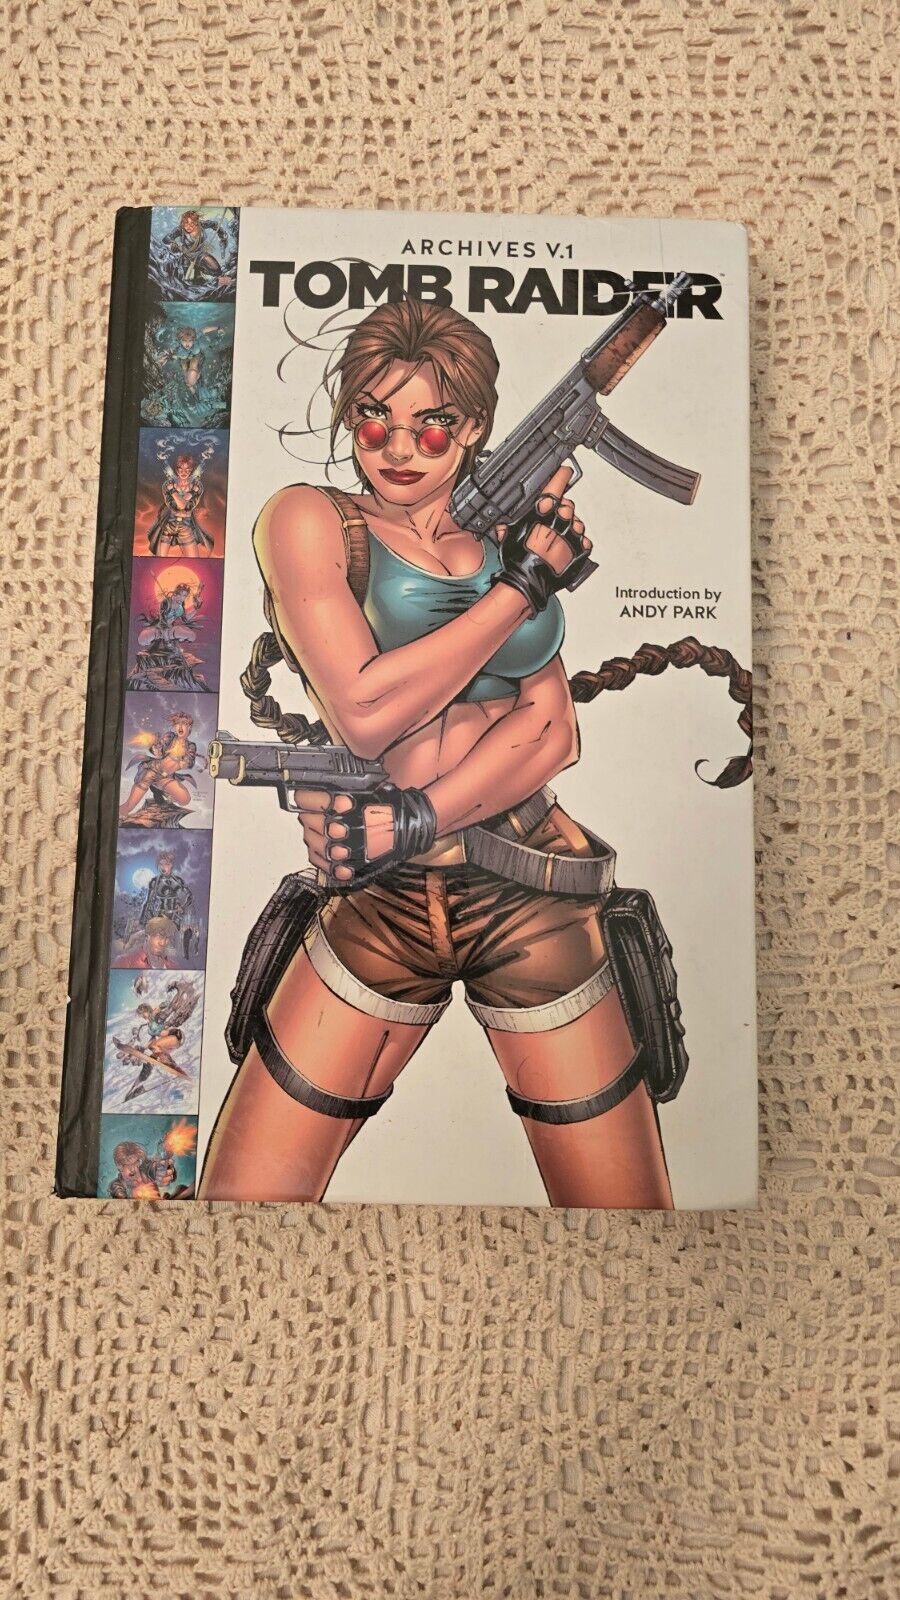 Tomb Raider Archives Vol.1 hardcover comic